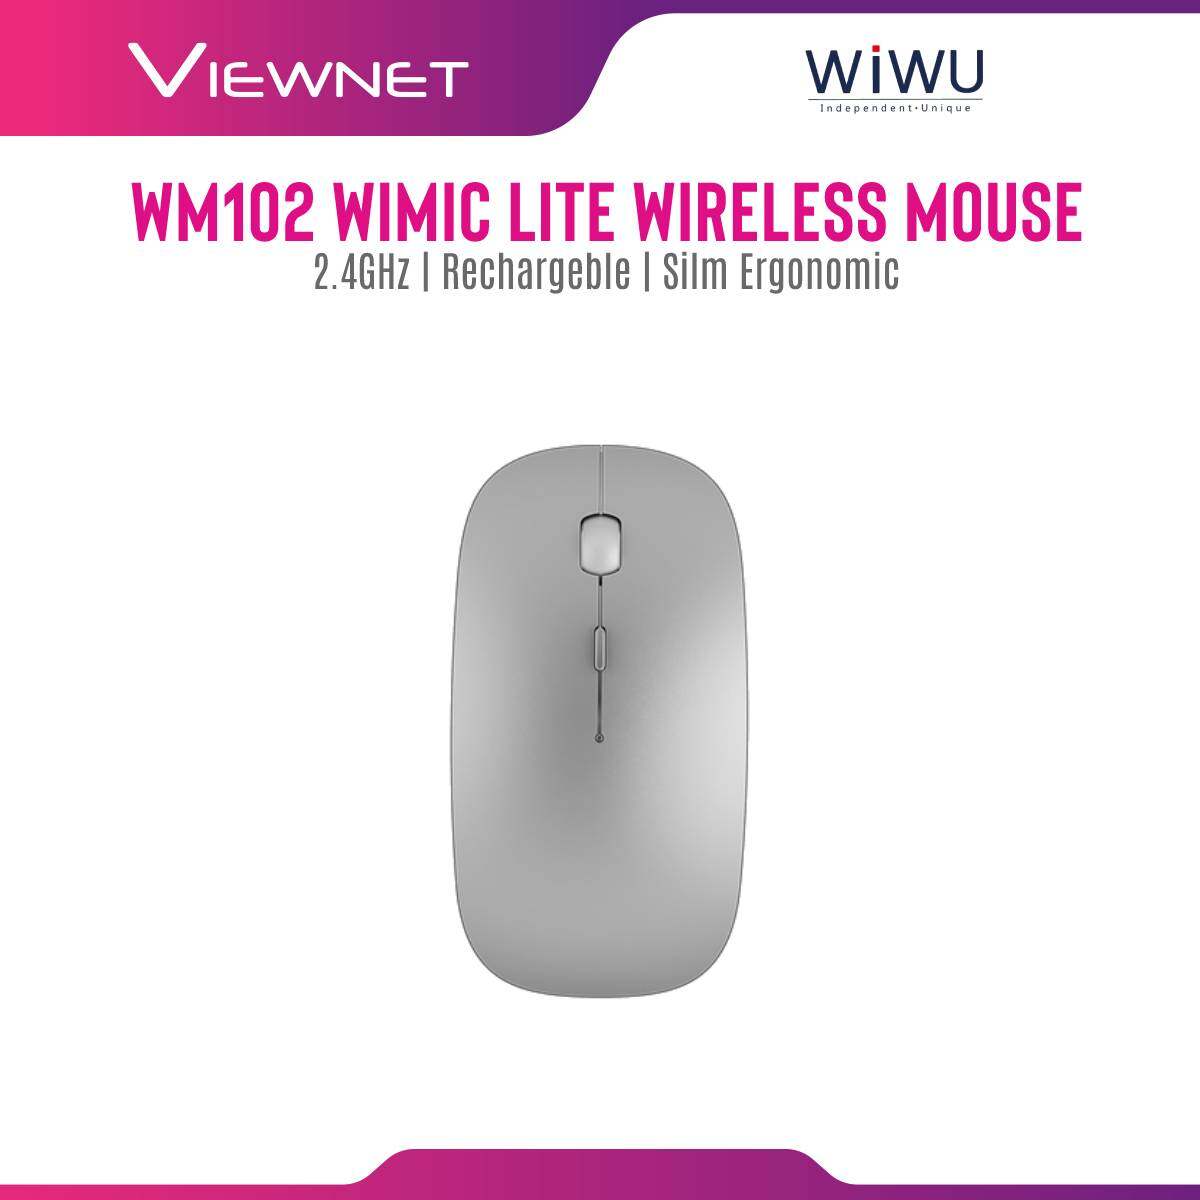 Wiwu WM102 Wimic Lite Wireless Rechargeable Mouse